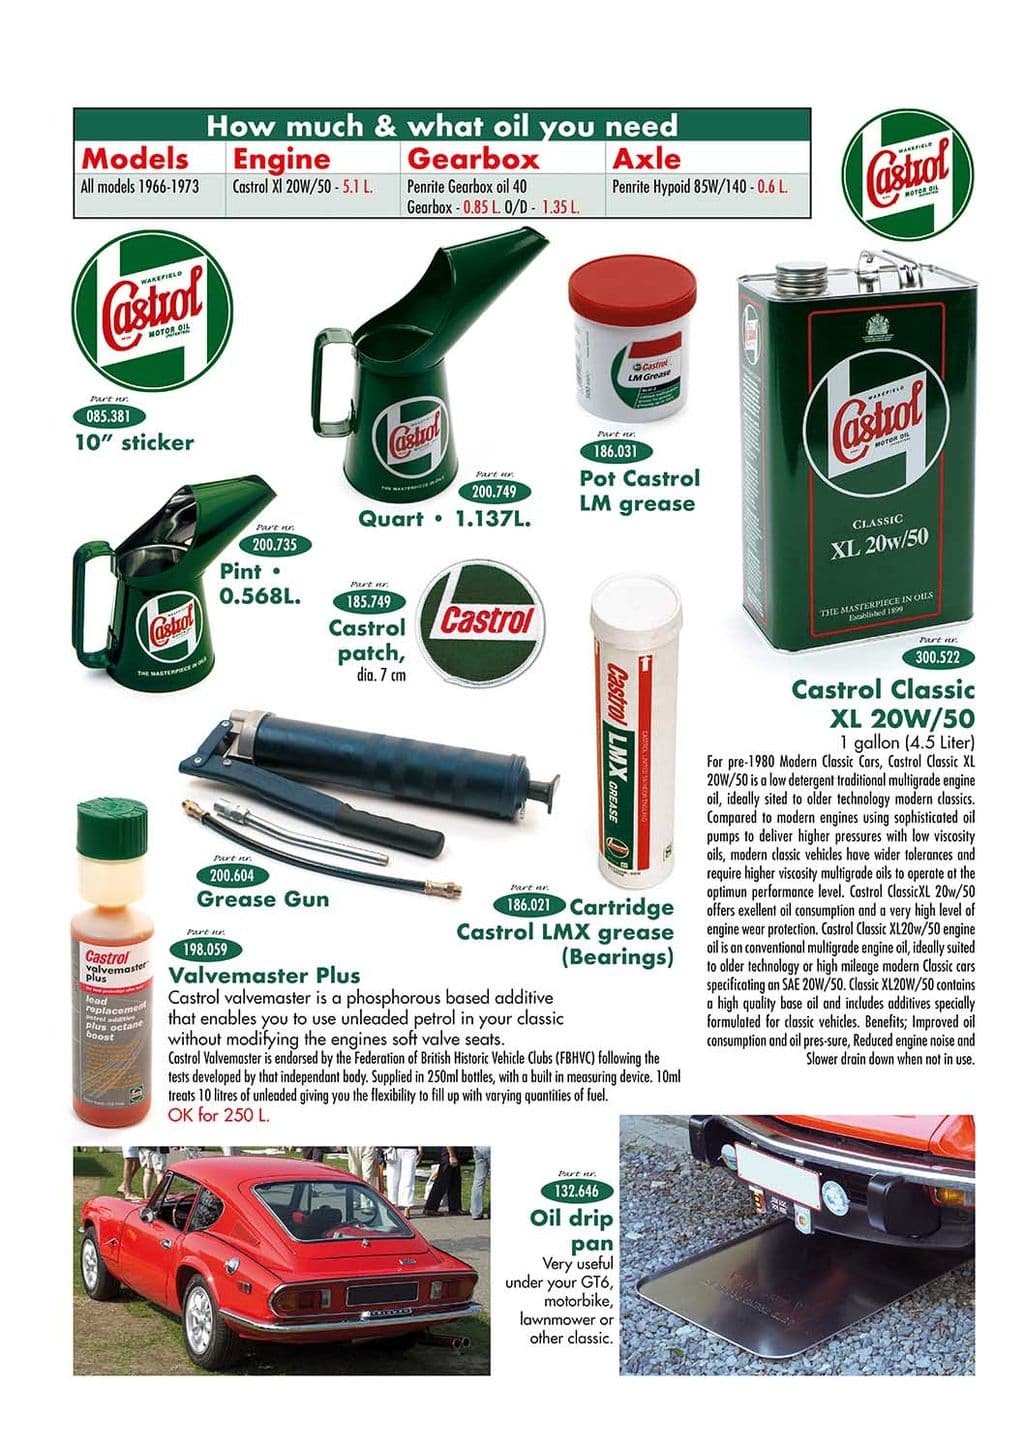 Oil cans & drip pan - Olie lekplaat - Onderhoud & opslag - Jaguar XJ6-12 / Daimler Sovereign, D6 1968-'92 - Oil cans & drip pan - 1